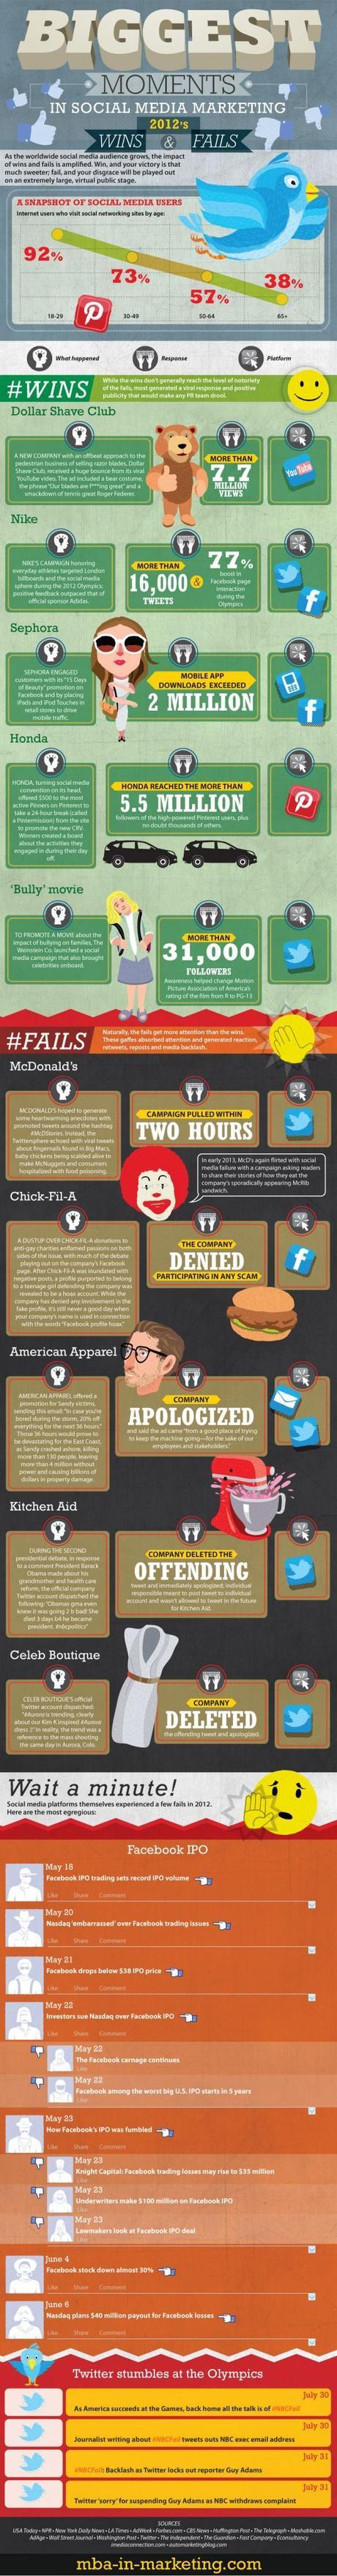 Infographic of biggest social media failures